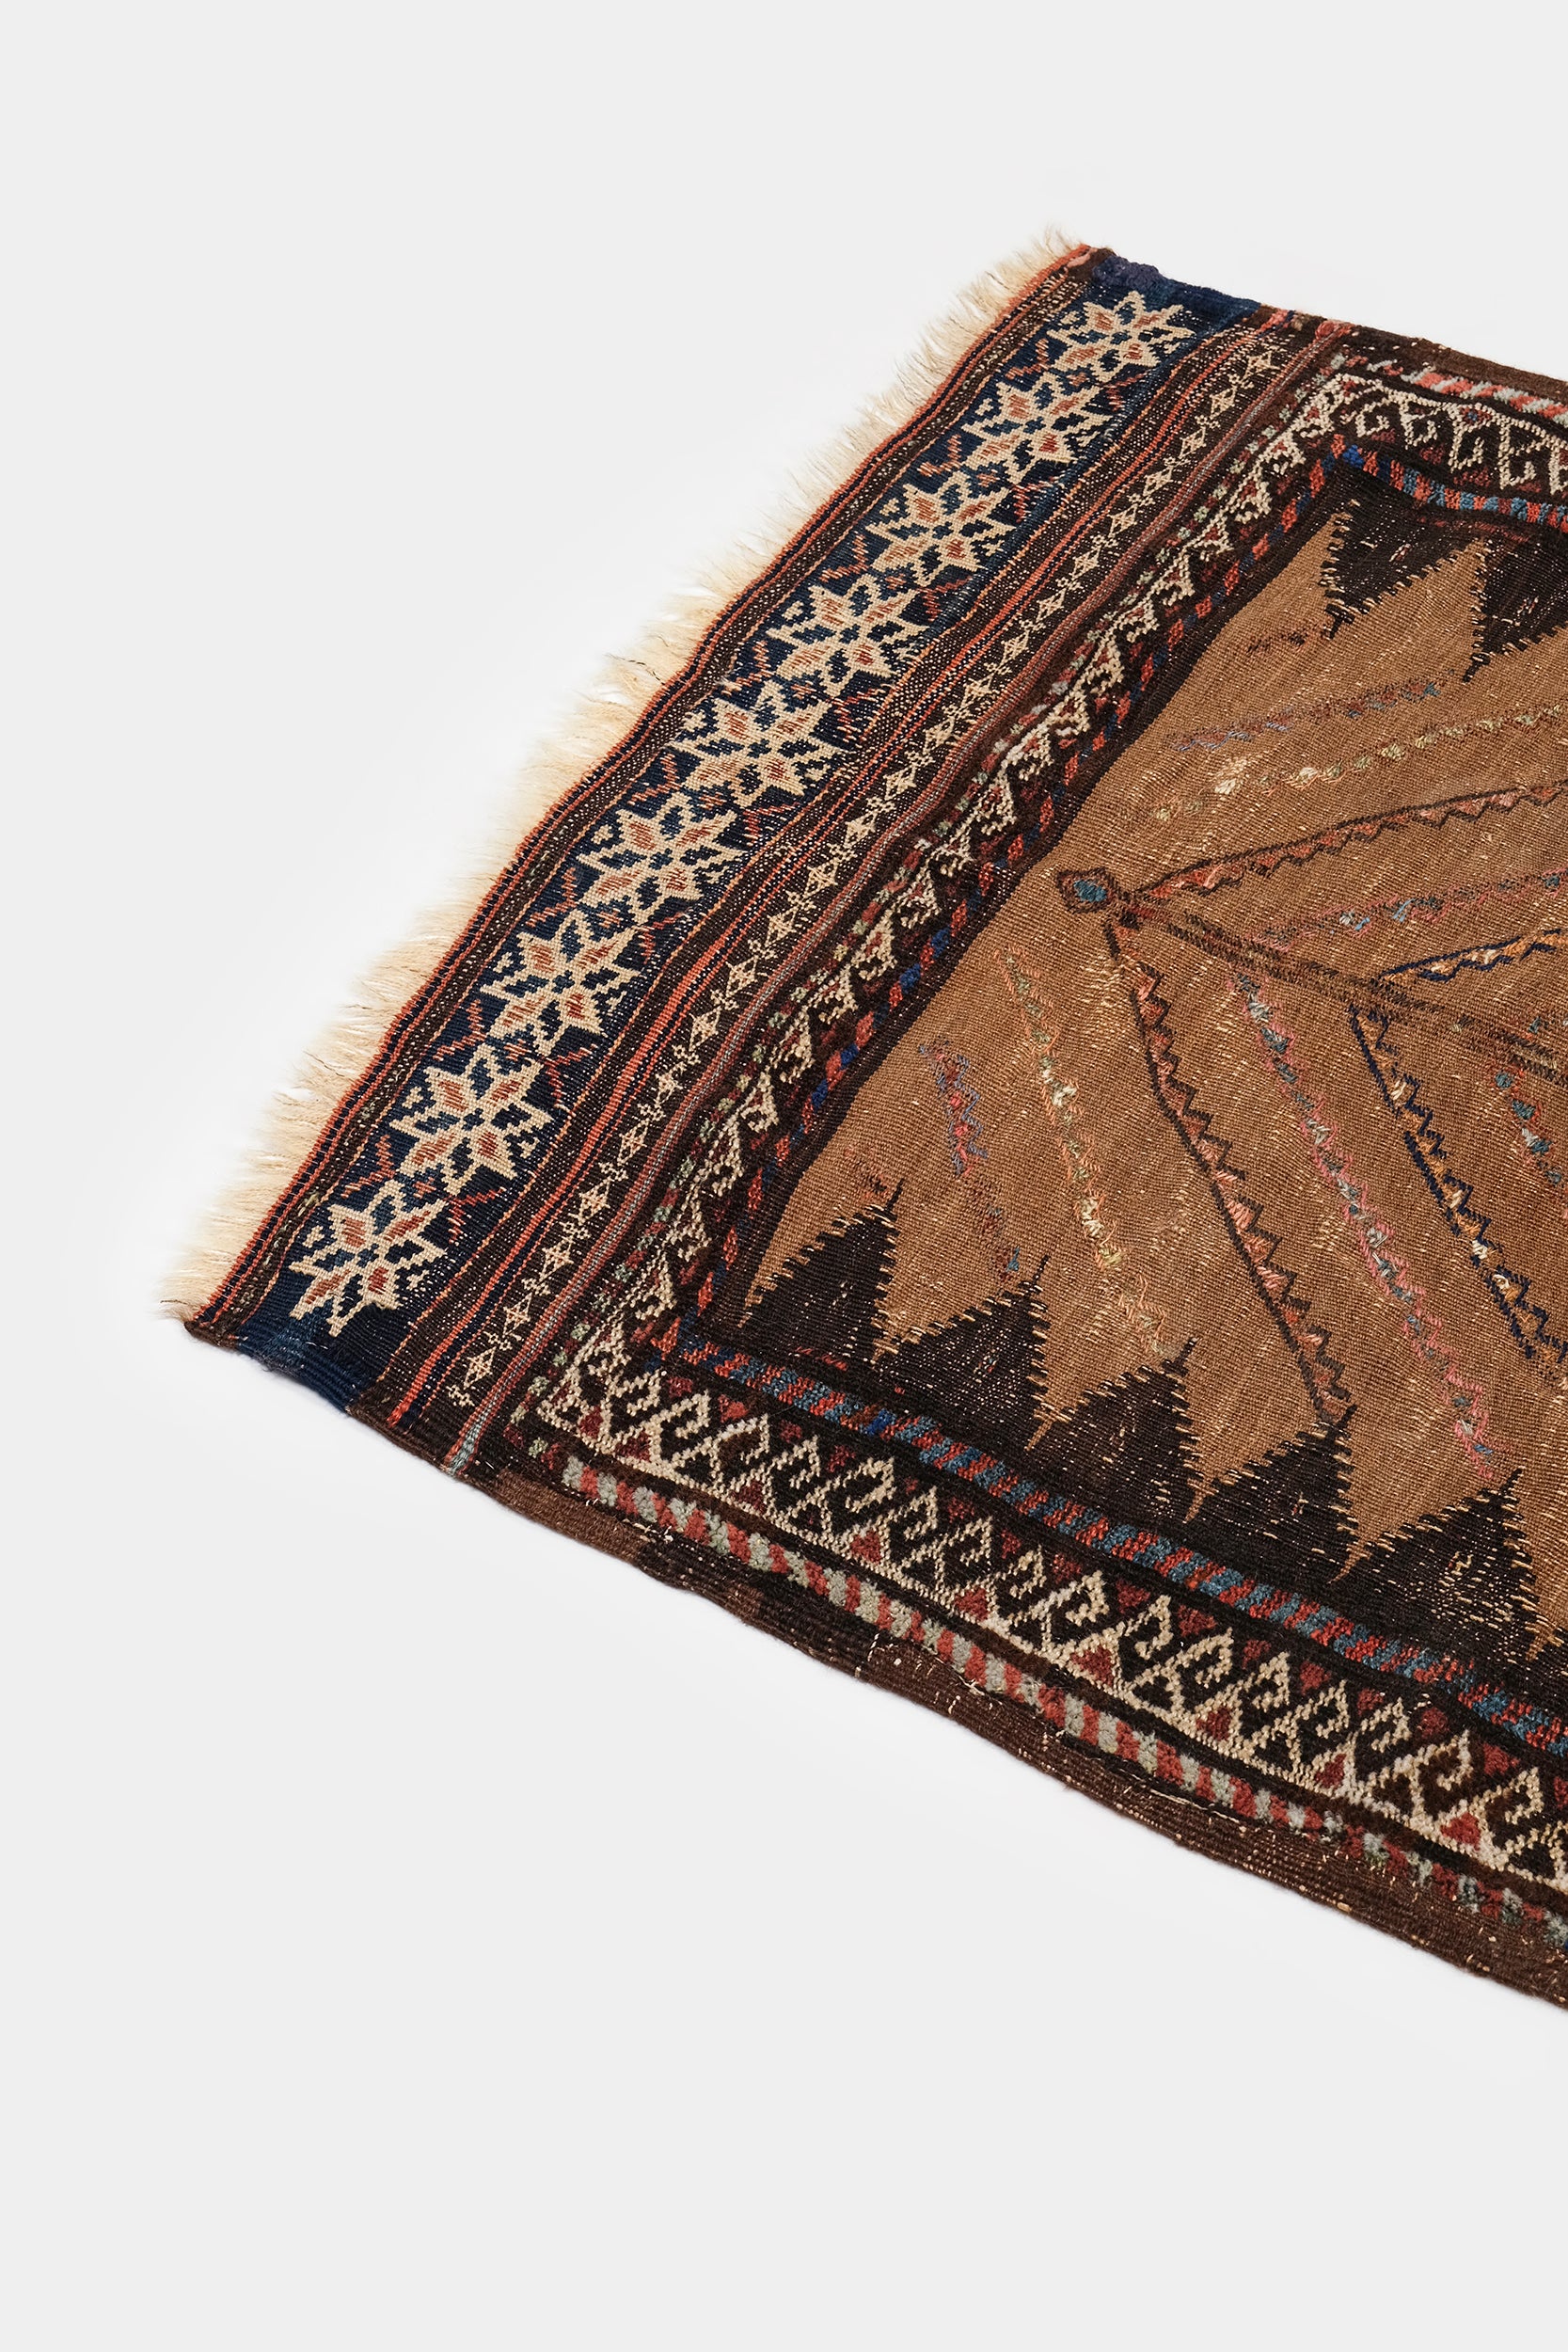 Carpet, Beluchi Sistani, Persia, 40s